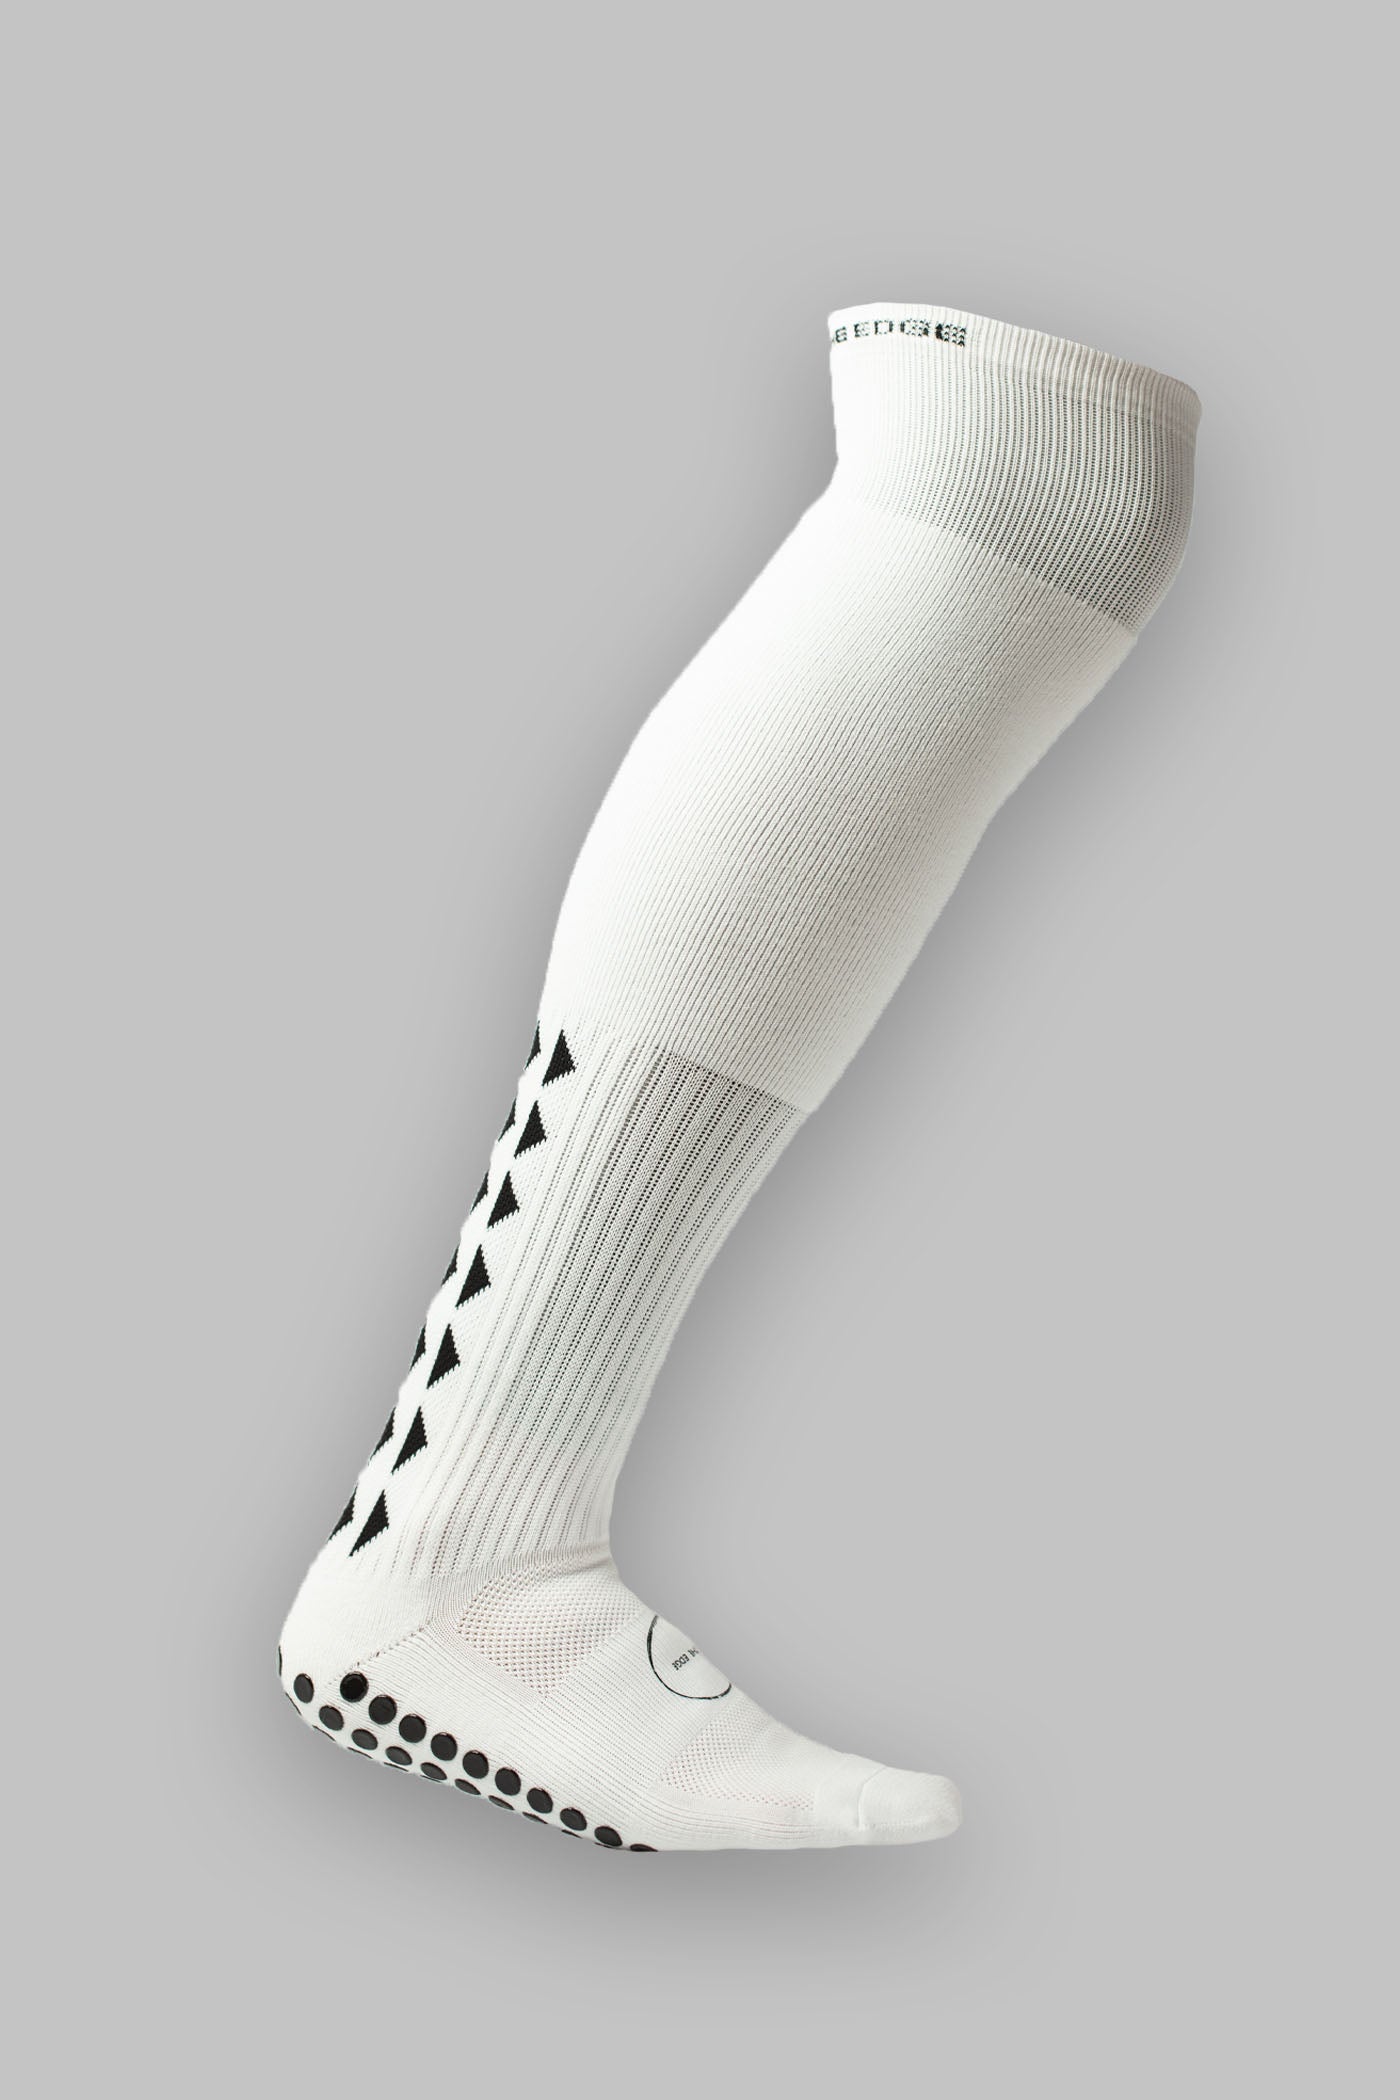 GRIP SOCKS 2.0 MidCalf Length - Black – Gain The Edge US, Grip Socks 